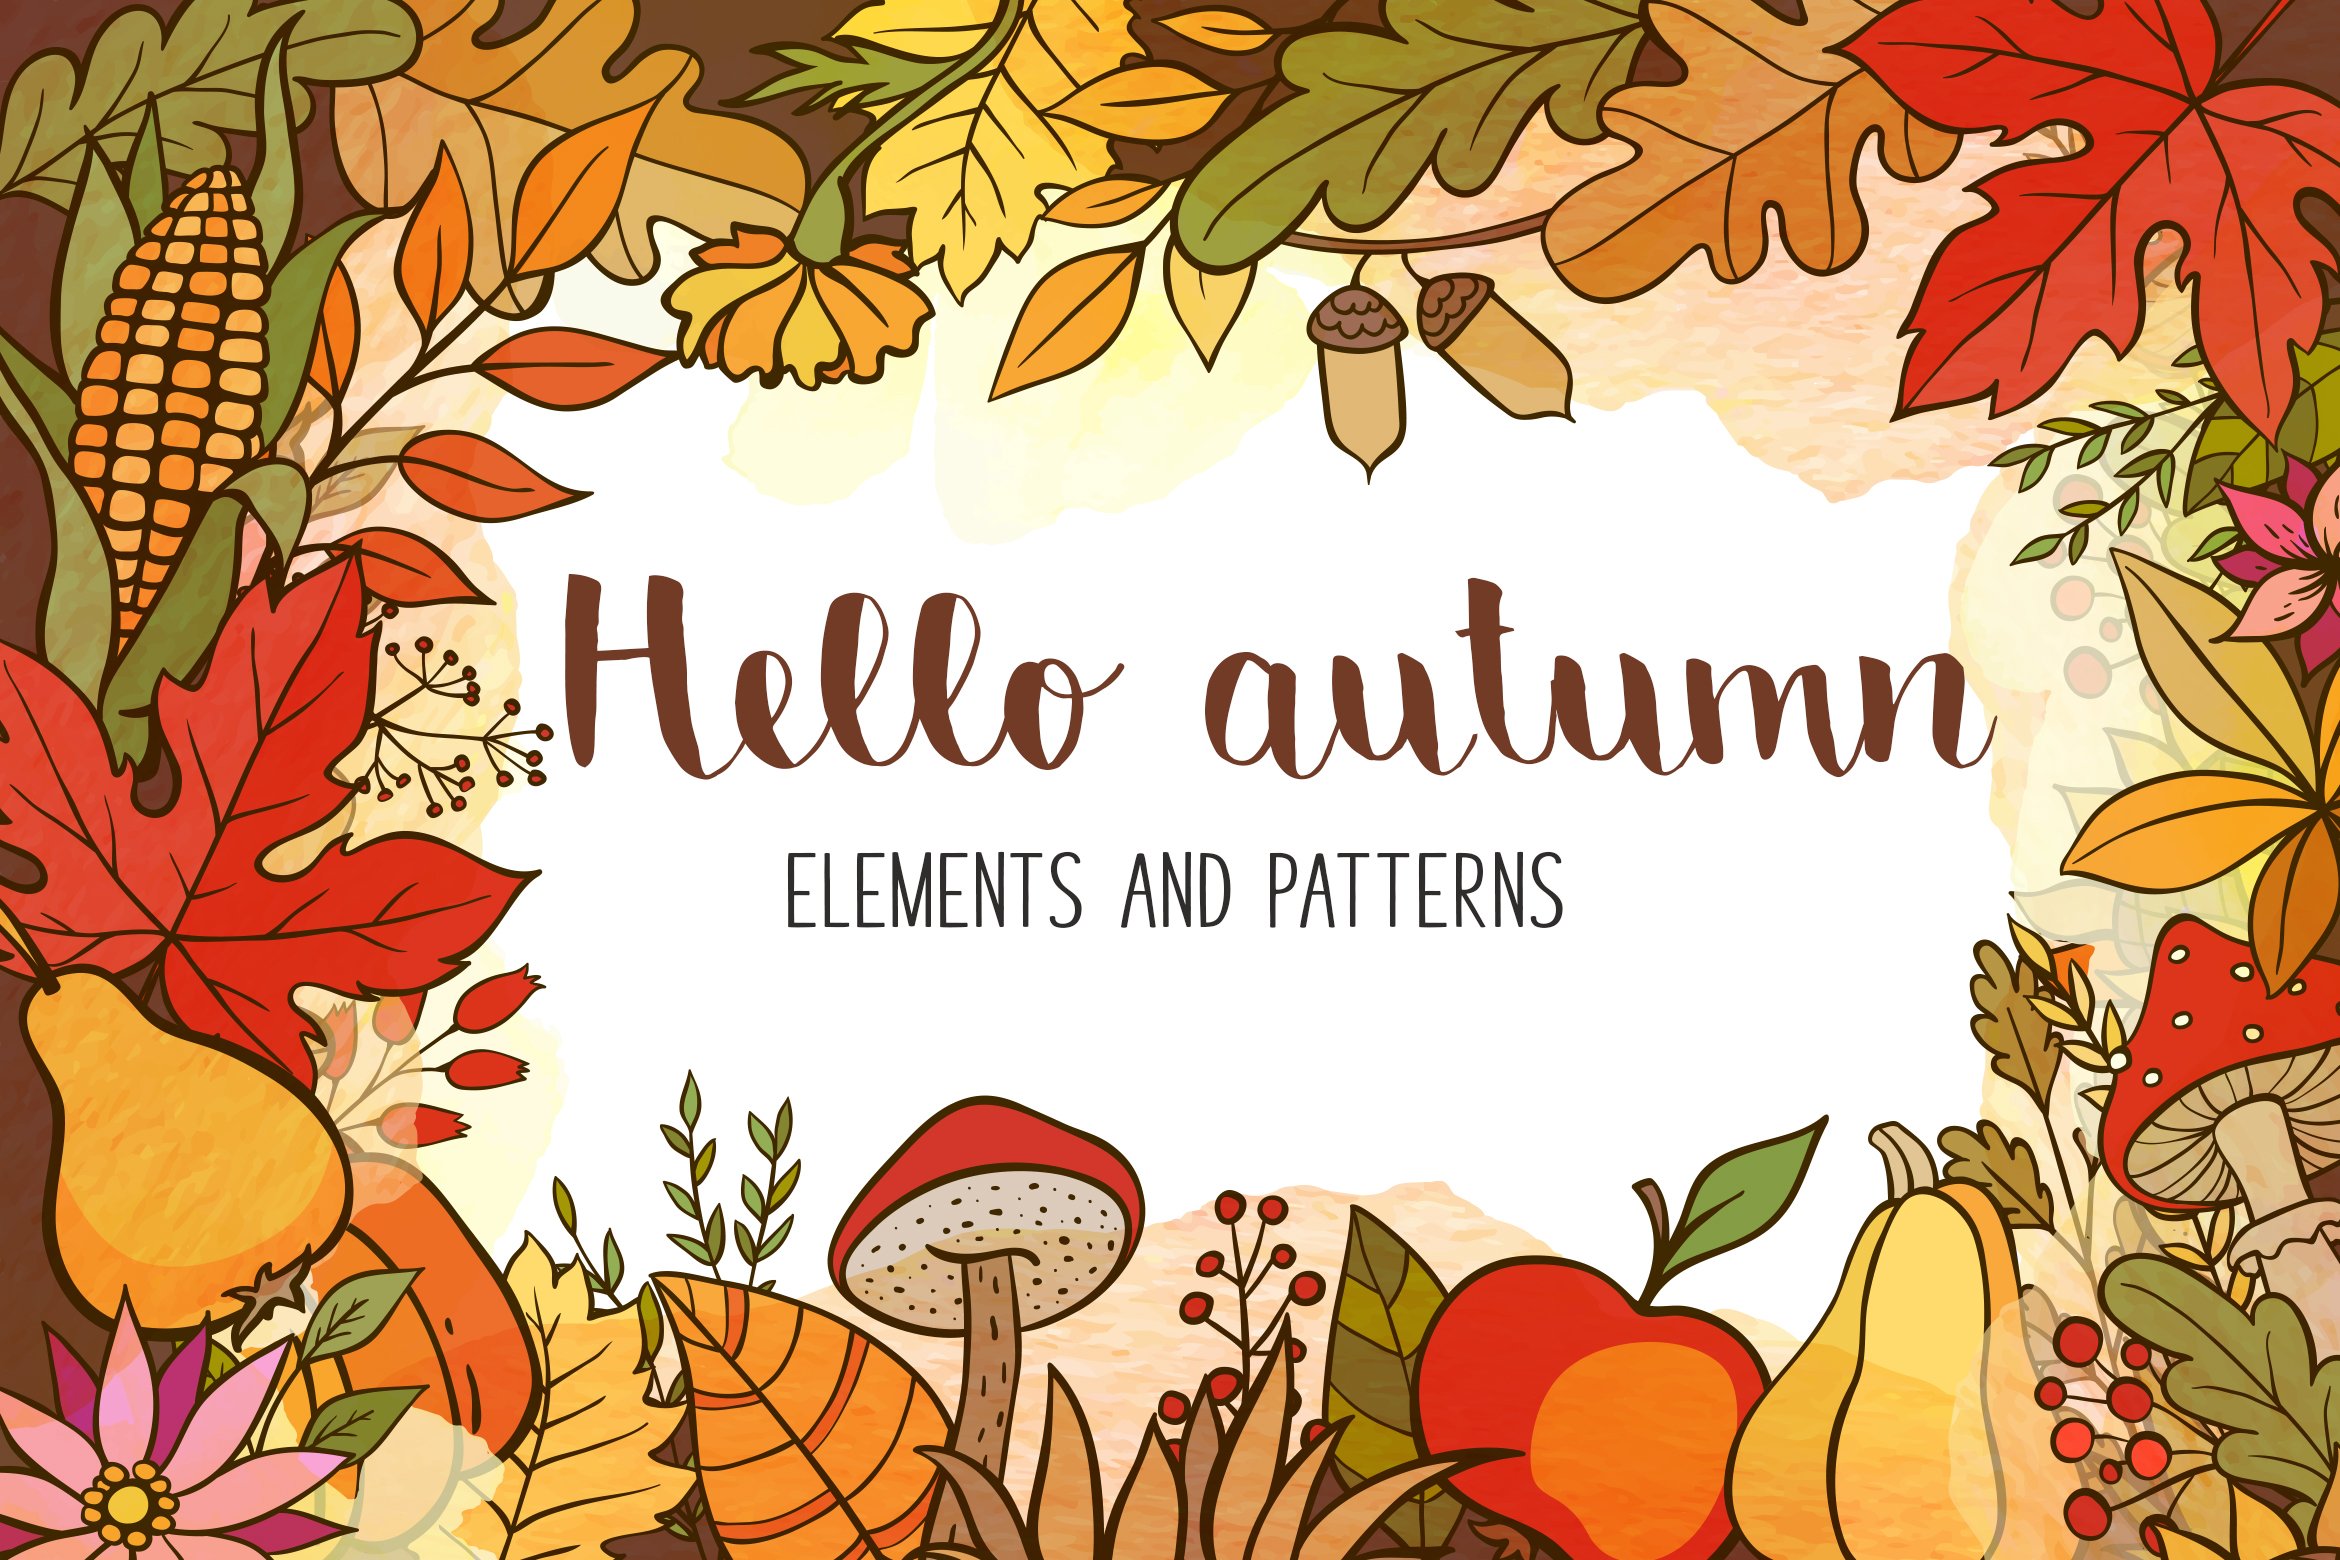 Autumn doodle & lettering kit. By Sentimental Postman